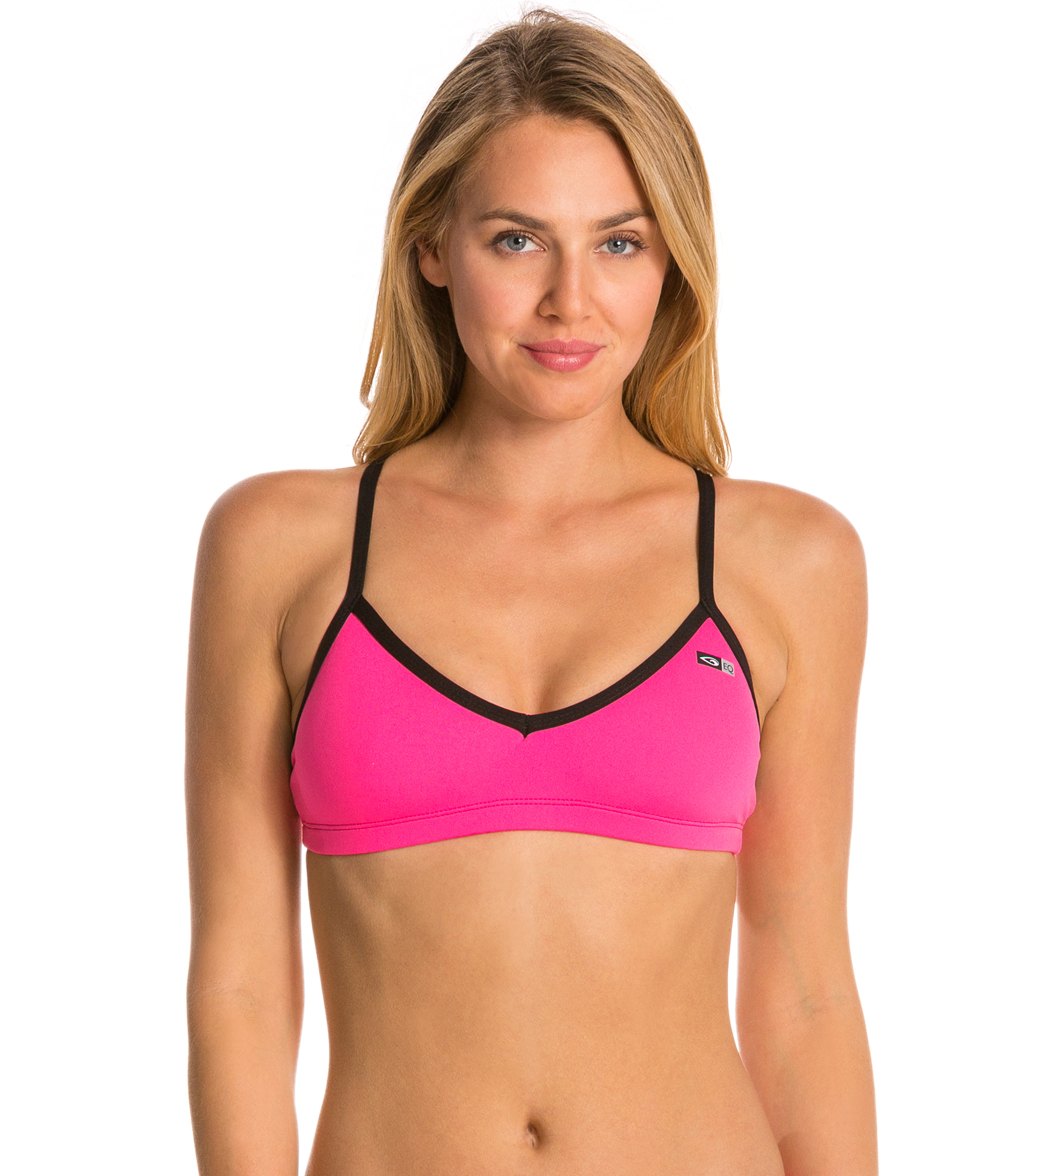 Eq Swimwear Solid Poly Passion Top - Hot Pink X-Small Nylon/Spandex - Swimoutlet.com